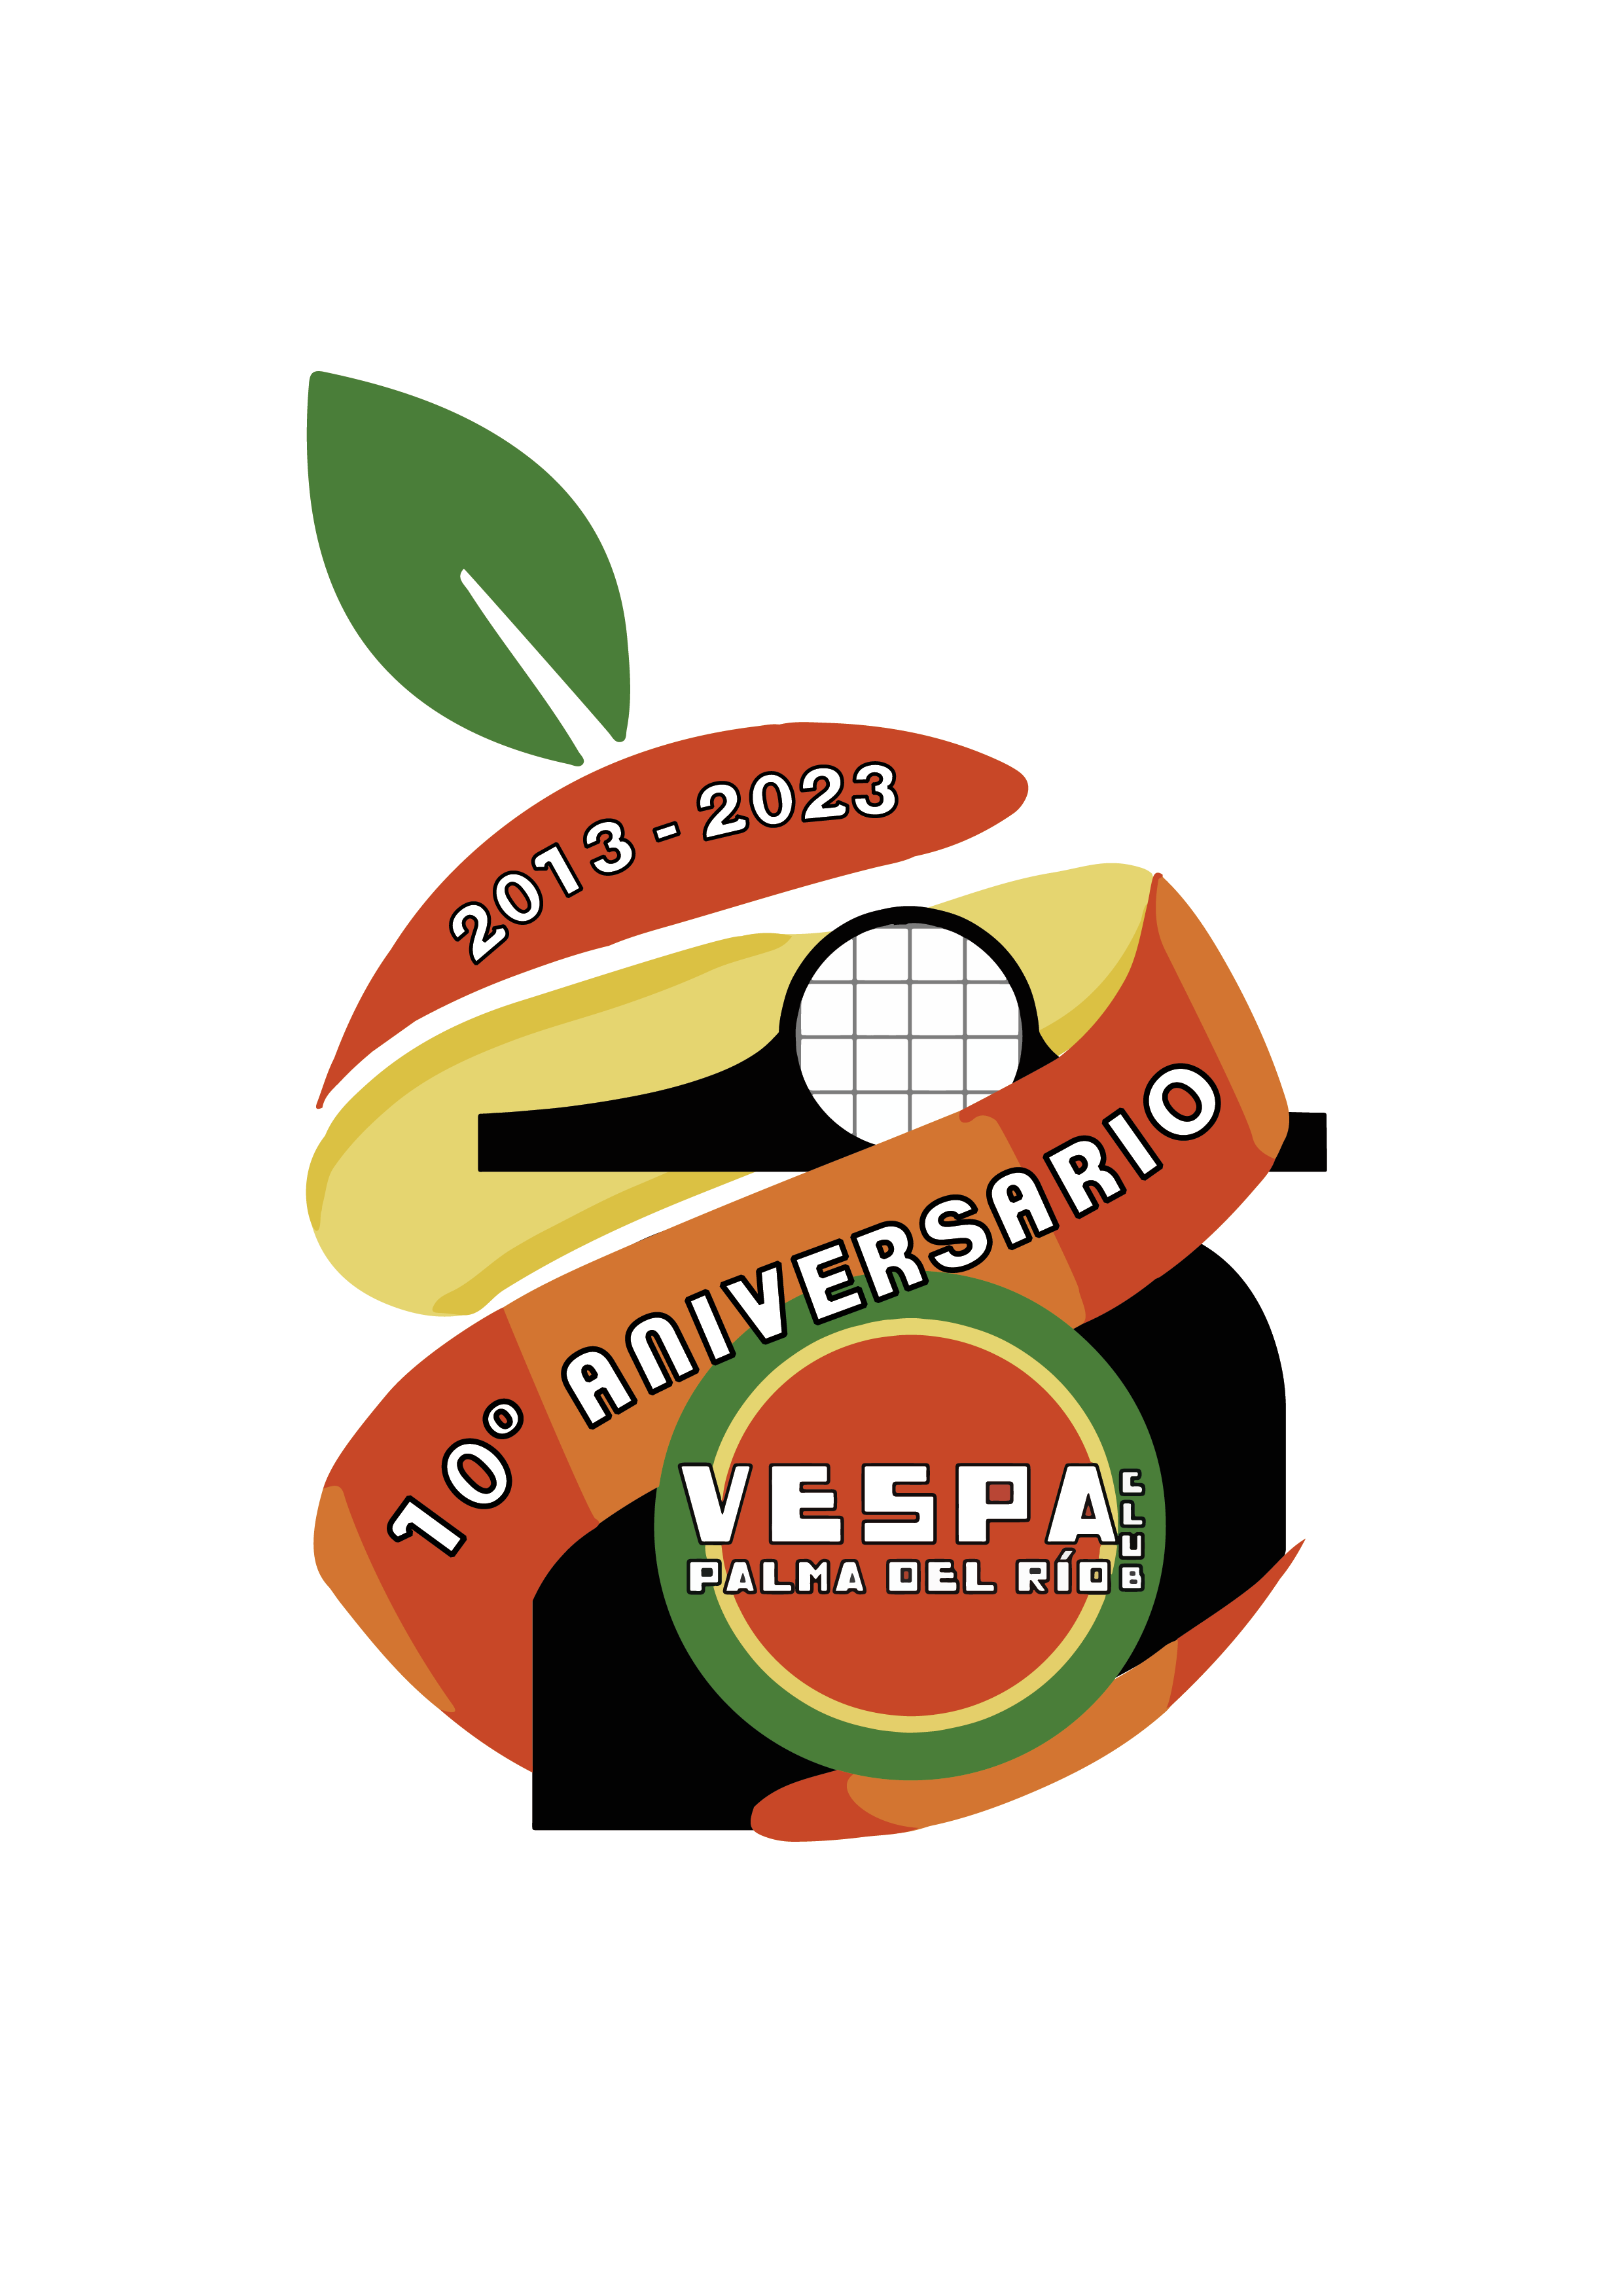 vespa club palma del rio logo